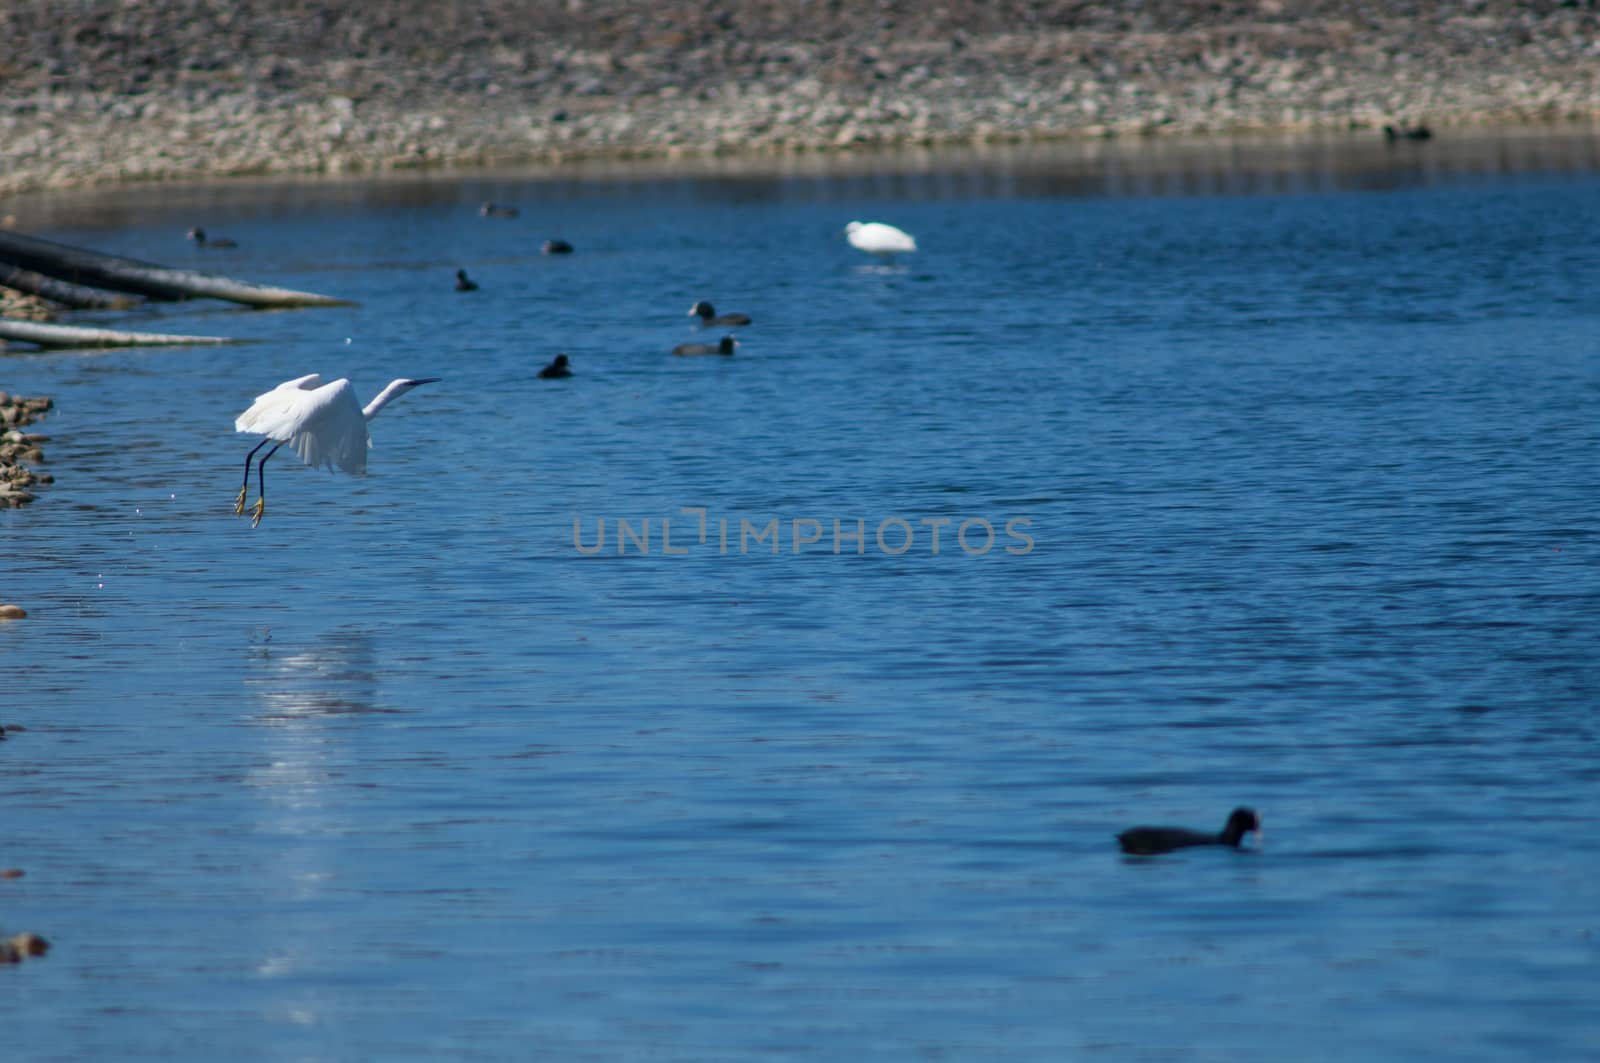 Little egret (Egretta garzetta) taking flight. by VictorSuarez